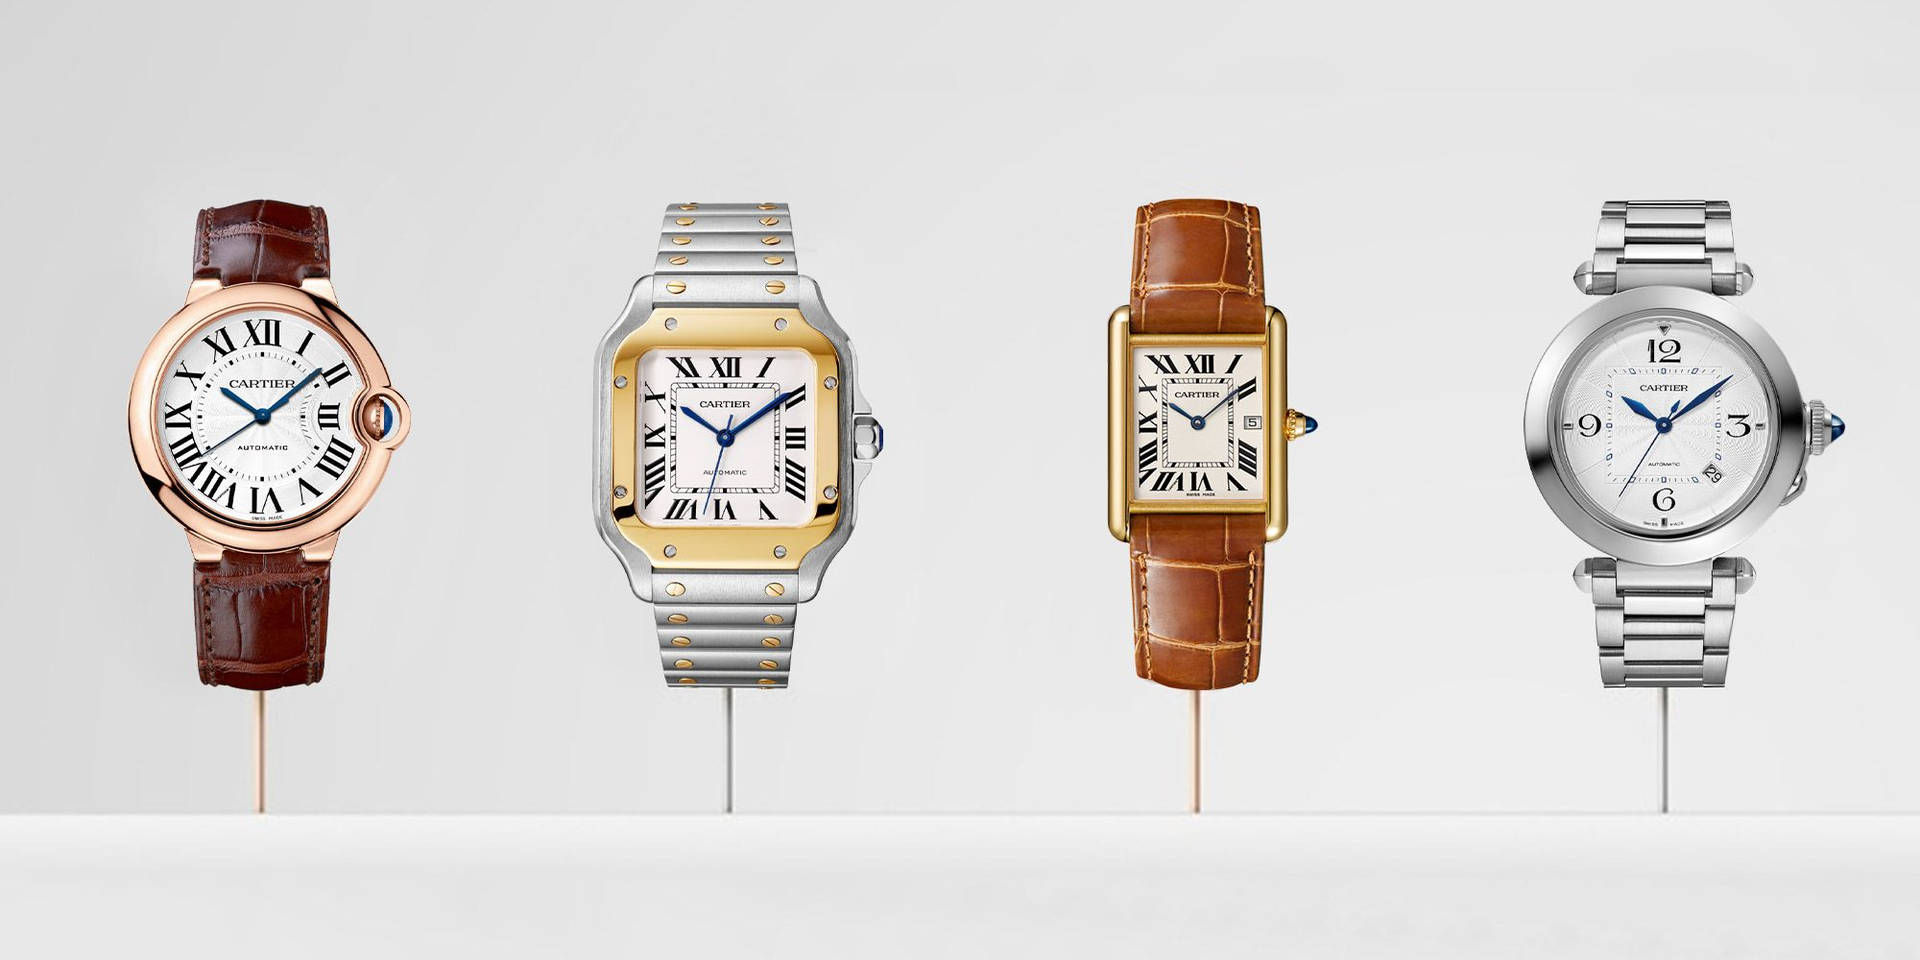 Cartier Watch Showcase Wallpaper